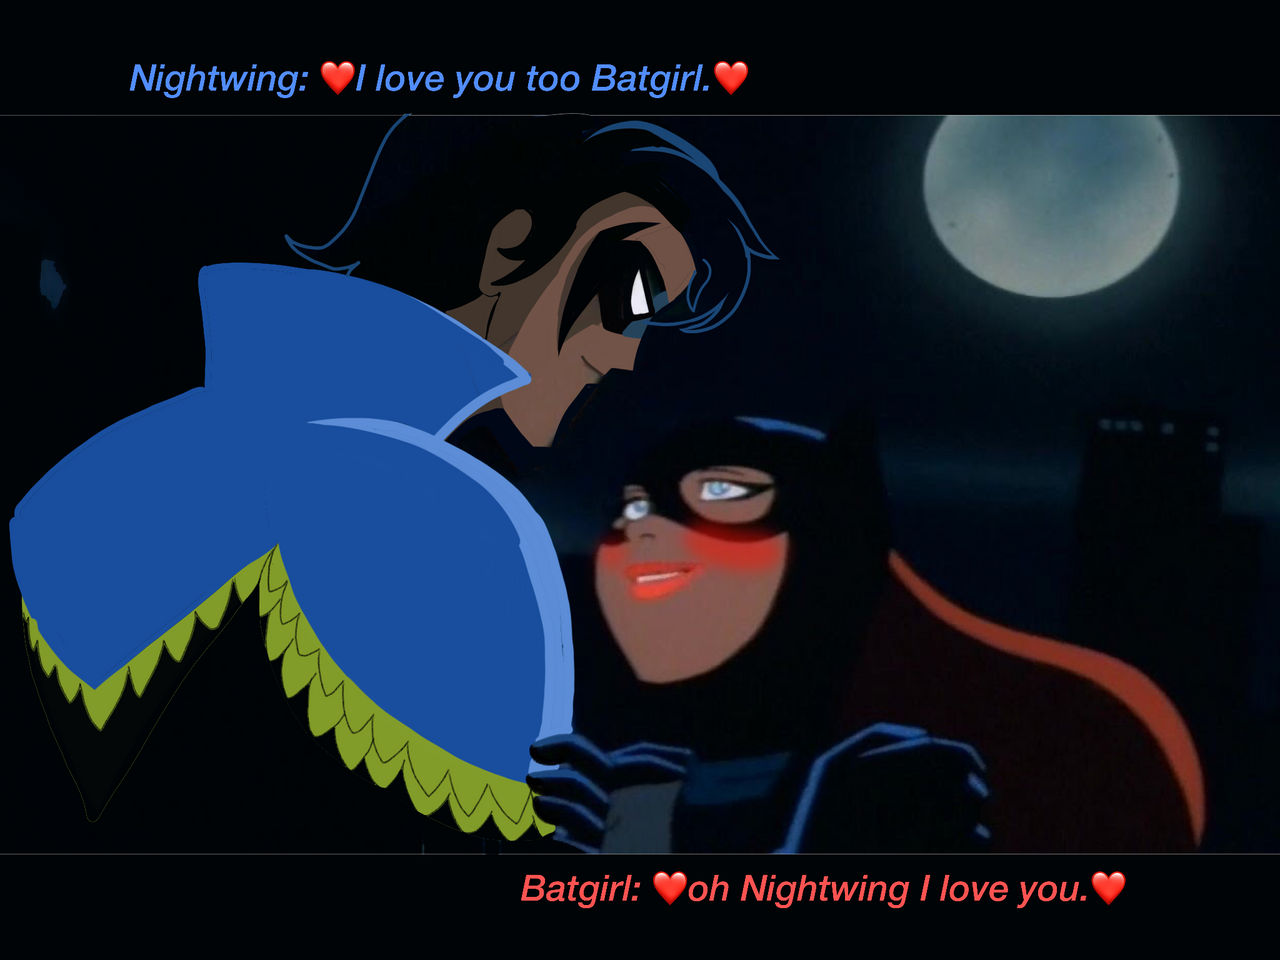 Batman the animated series - Nightwing x Batgirl by djpaint96 on DeviantArt